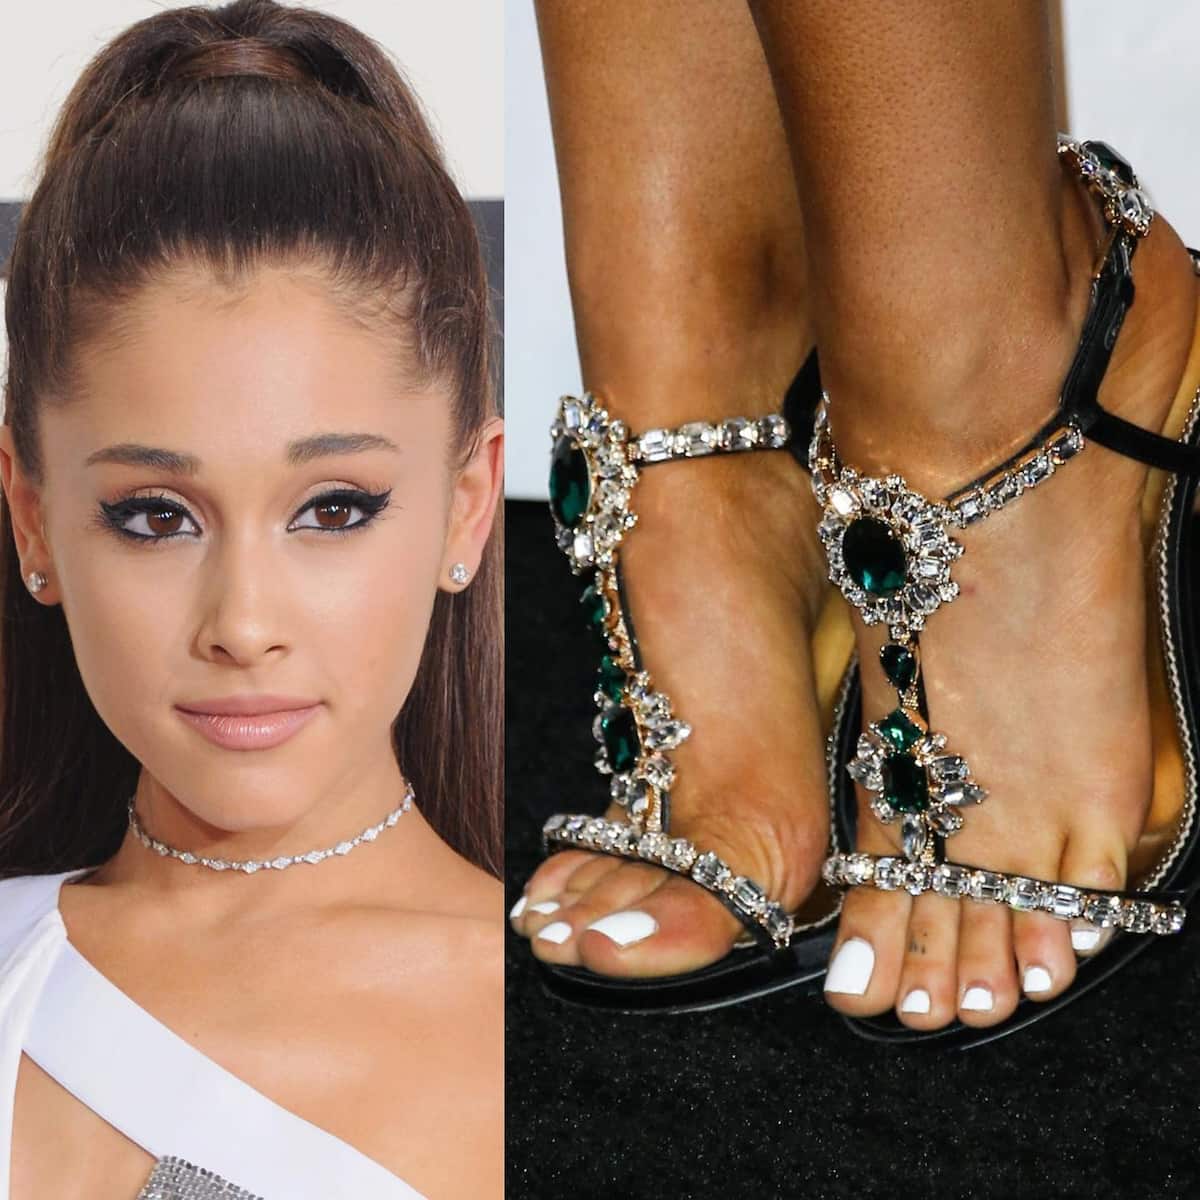 celebrities with pretty feet